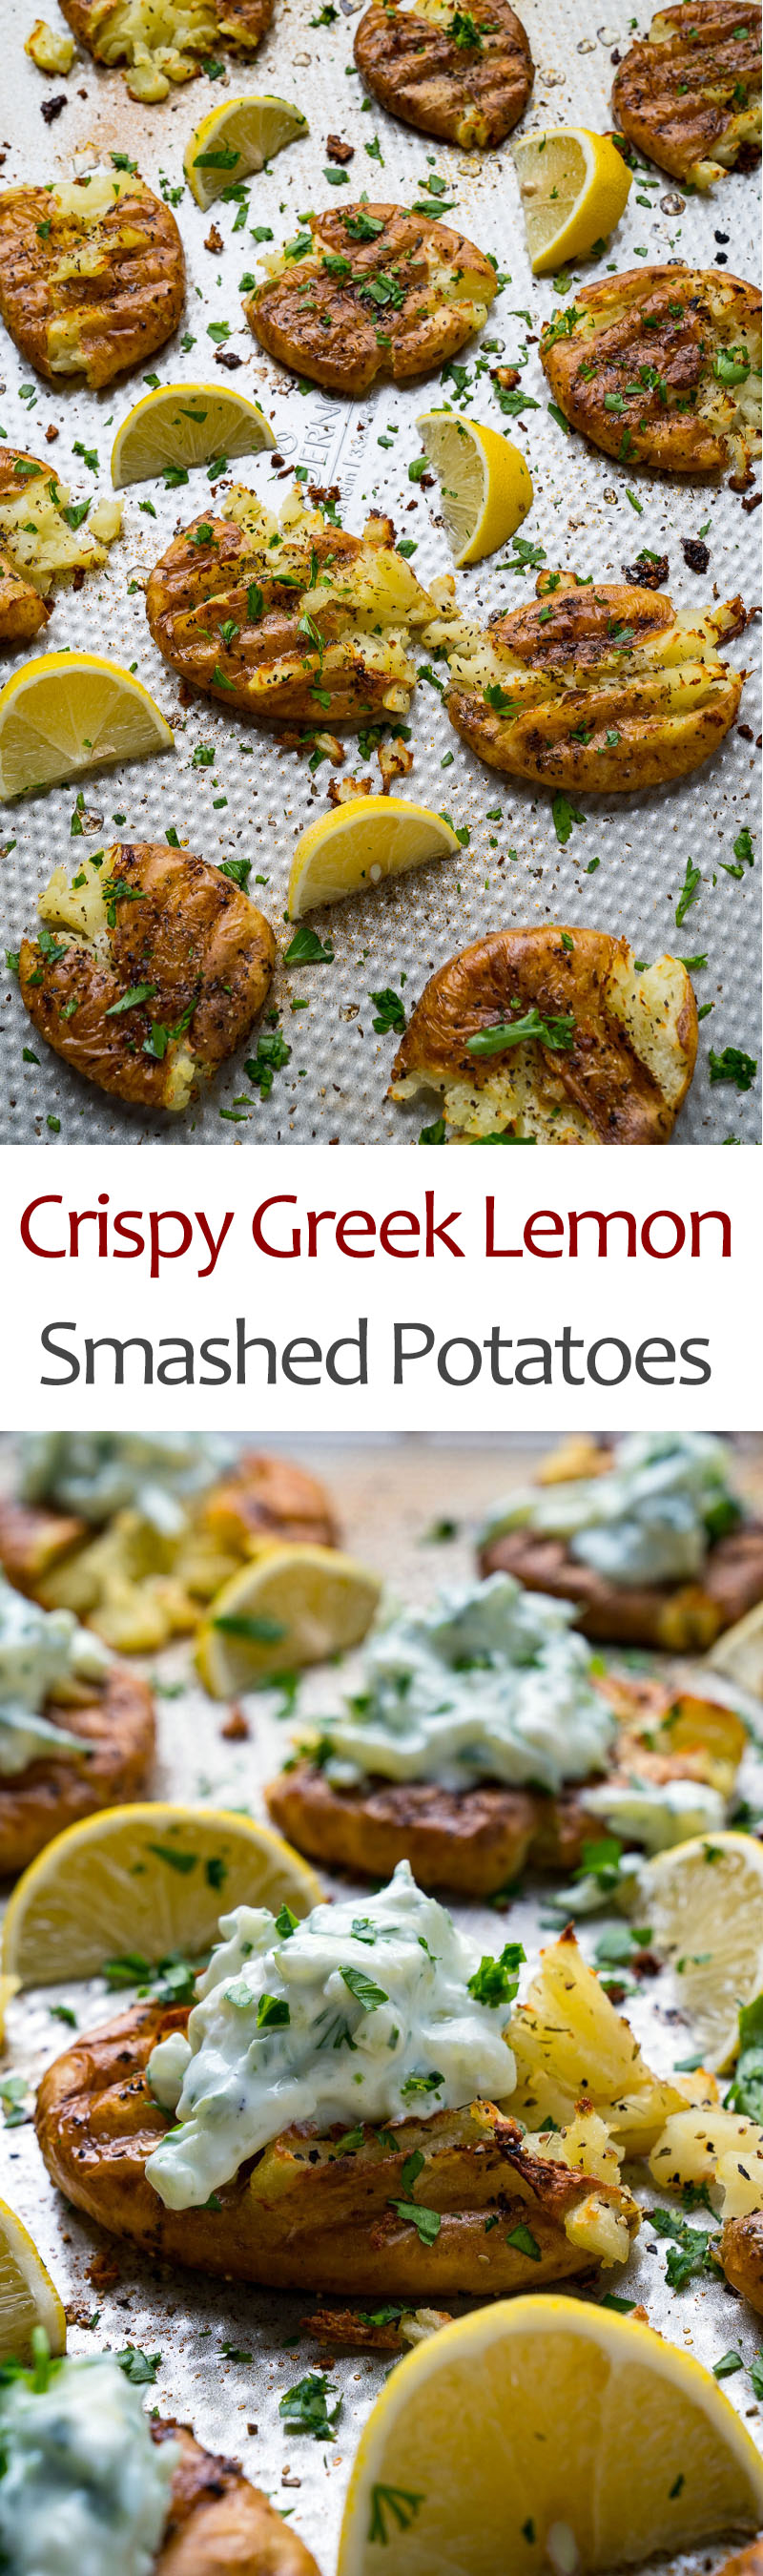 Crispy Greek Lemon Smashed Potatoes